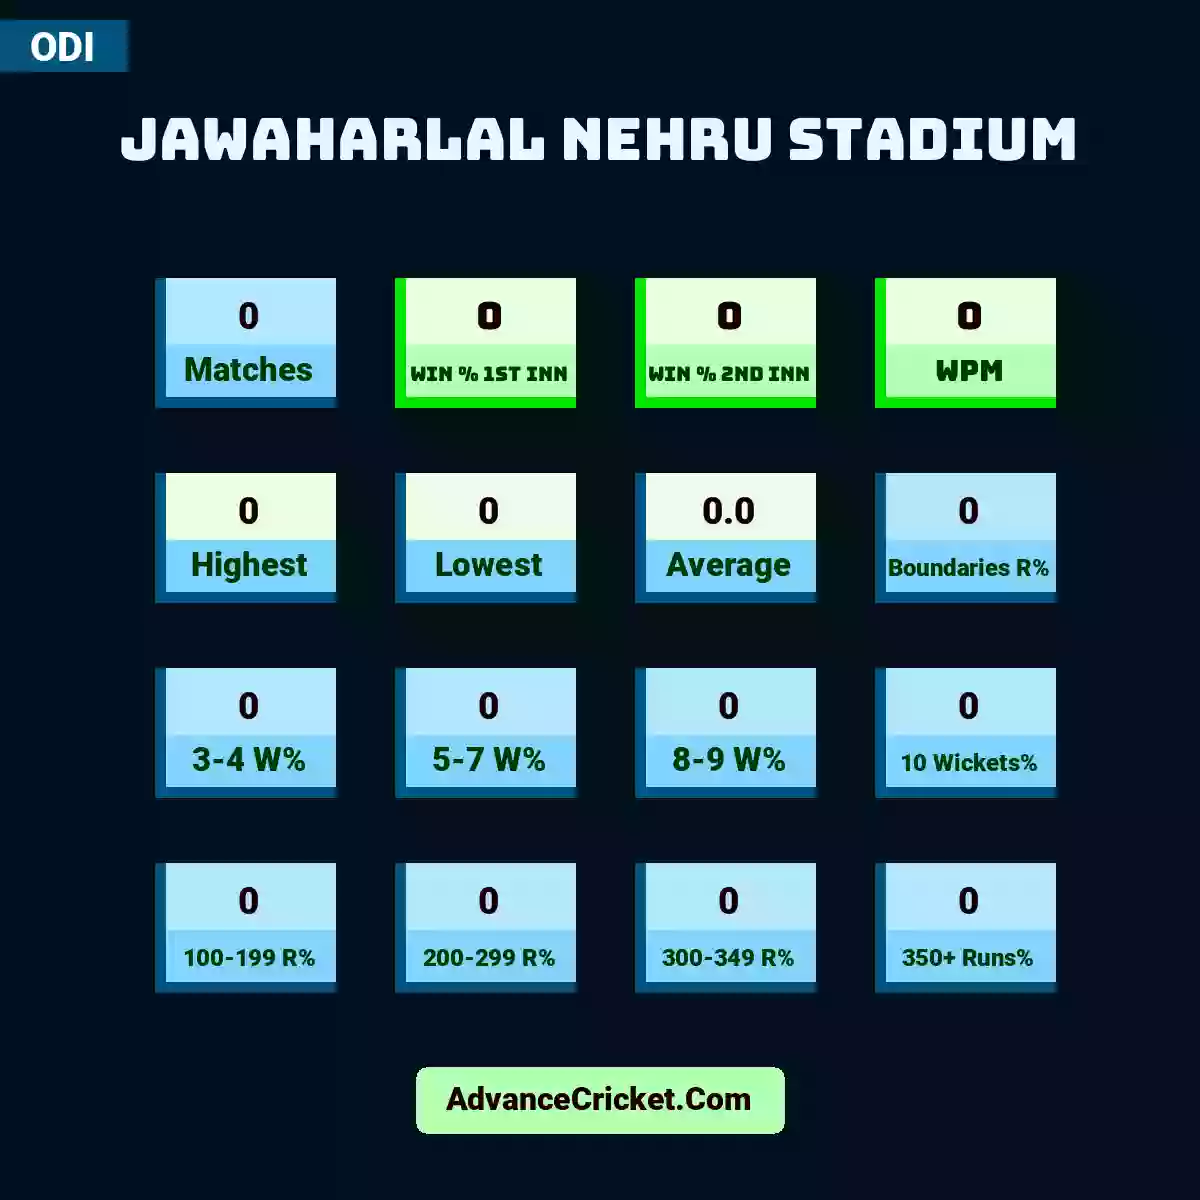 Image showing Jawaharlal Nehru Stadium with Matches: 0, Win % 1st Inn: 0, Win % 2nd Inn: 0, WPM: 0, Highest: 0, Lowest: 0, Average: 0.0, Boundaries R%: 0, 3-4 W%: 0, 5-7 W%: 0, 8-9 W%: 0, 10 Wickets%: 0, 100-199 R%: 0, 200-299 R%: 0, 300-349 R%: 0, 350+ Runs%: 0.